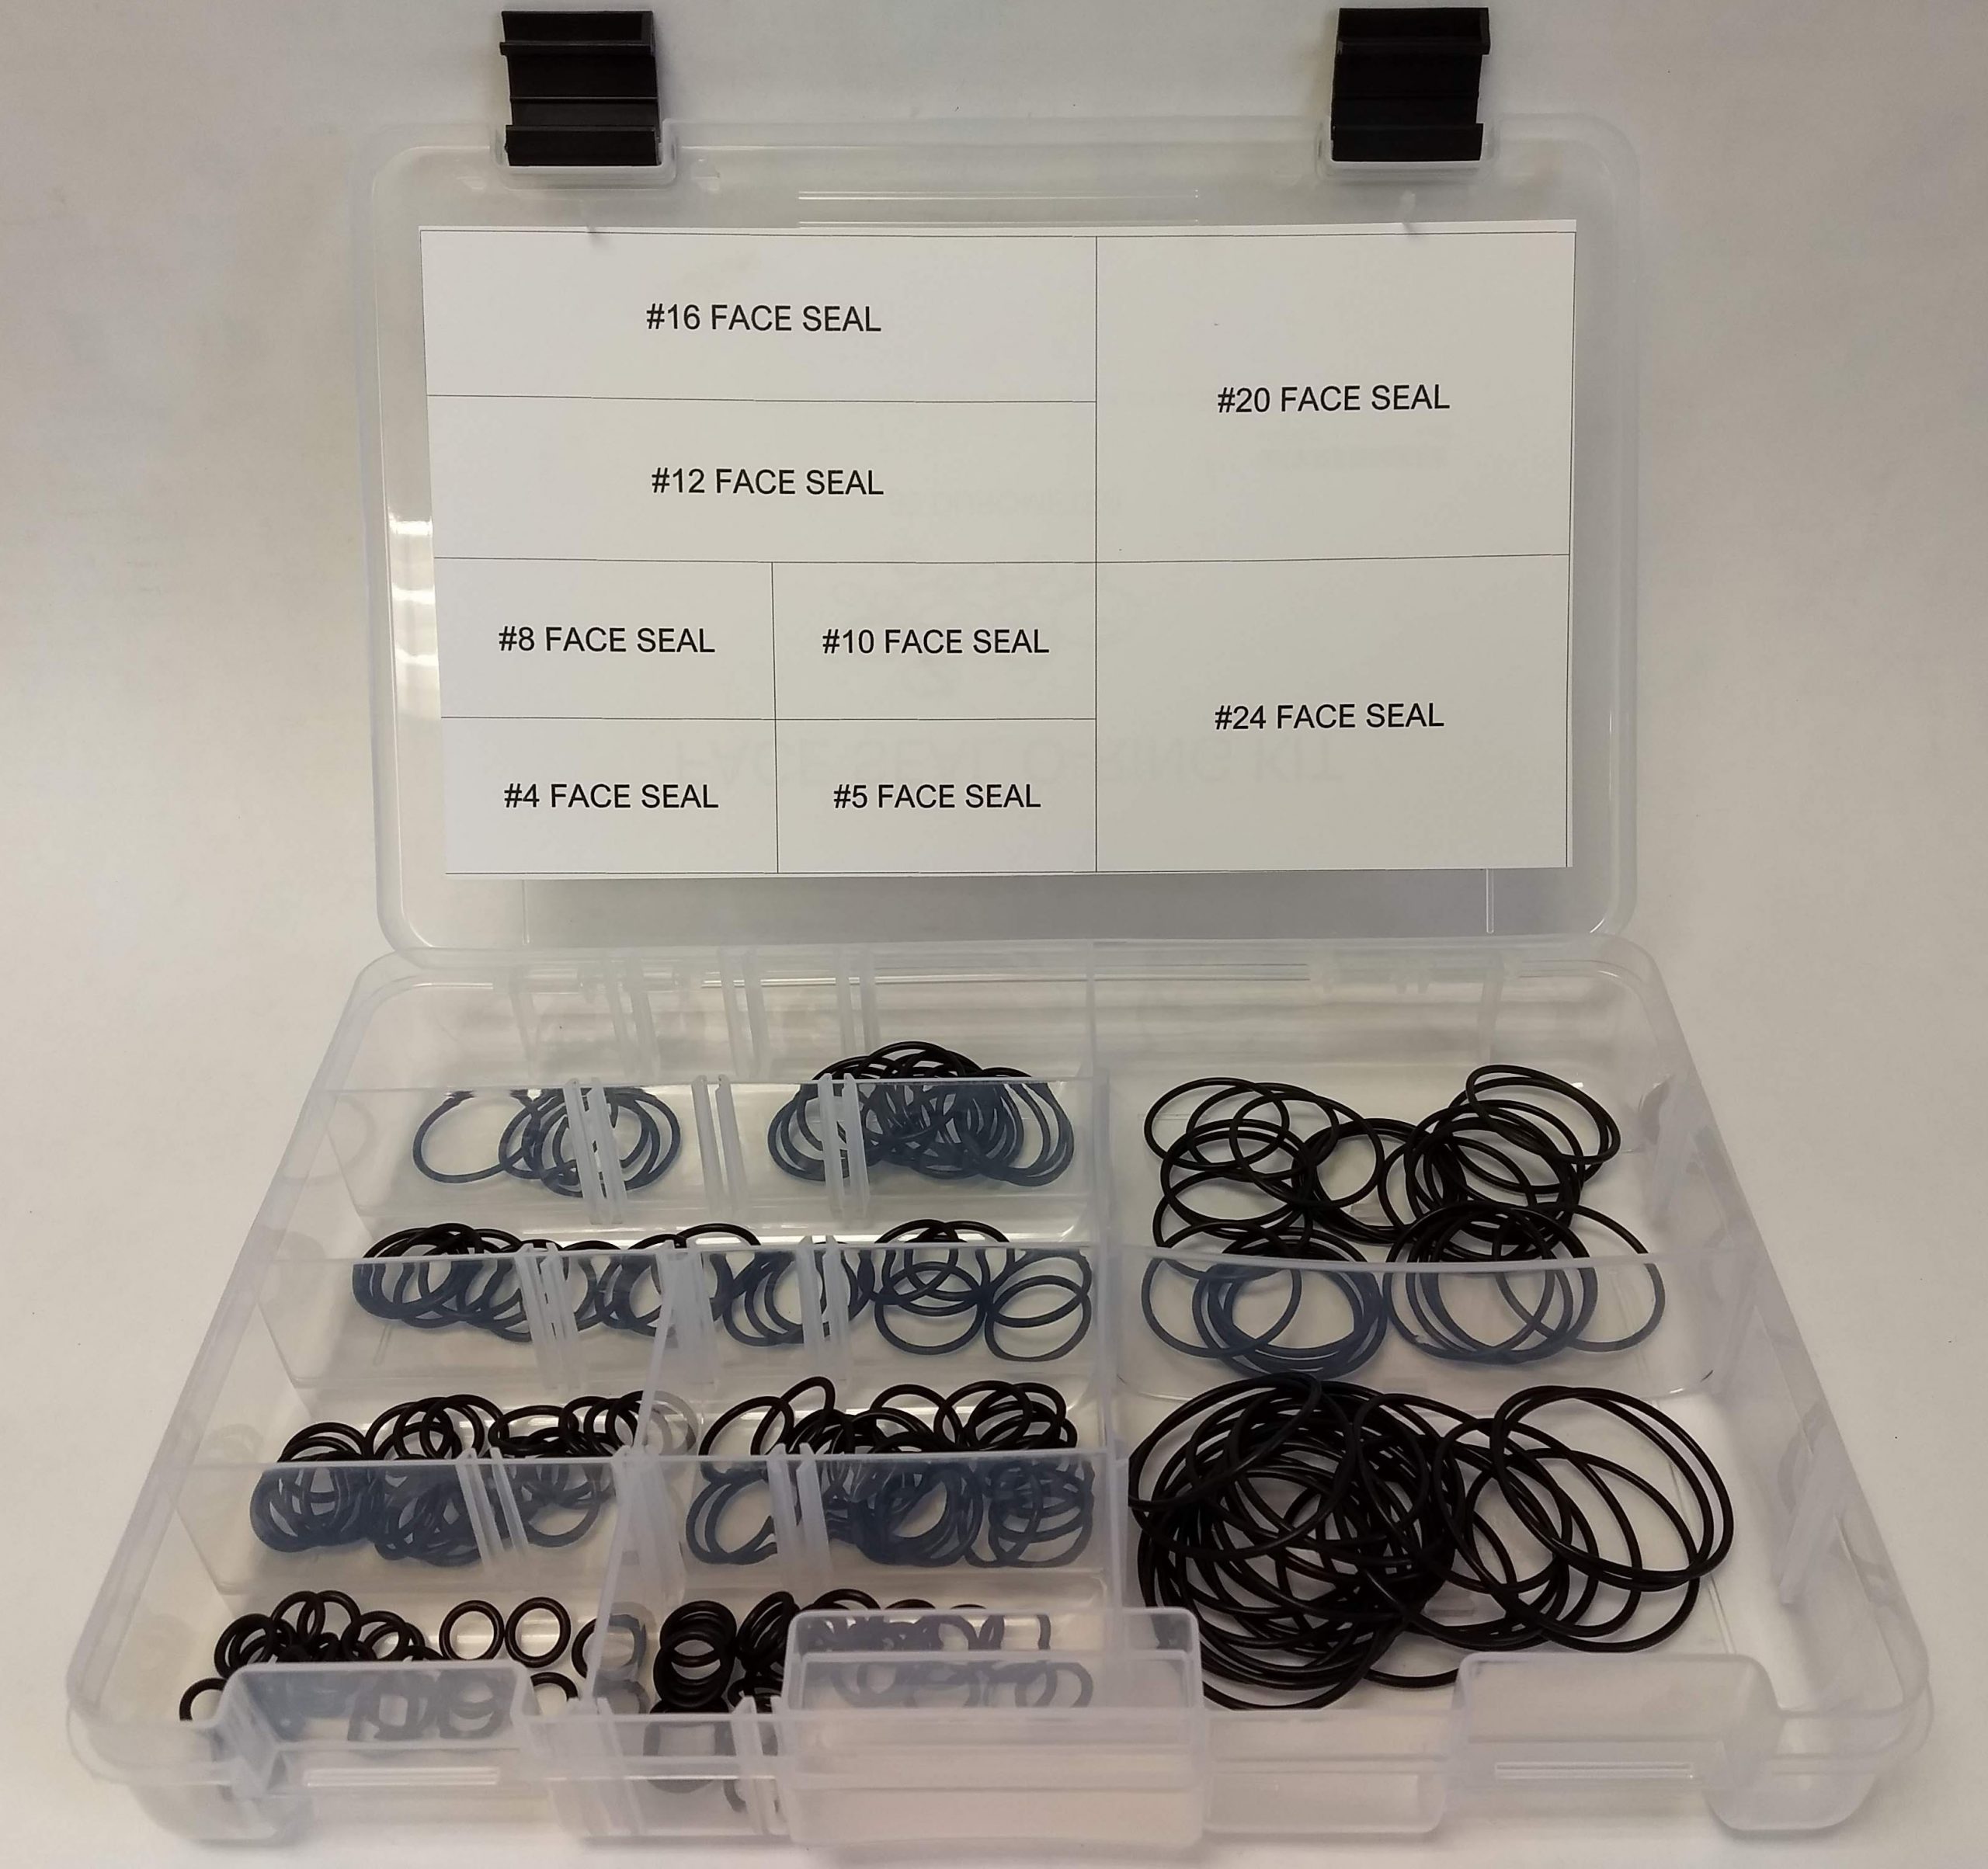 Phelps Style 8550 - Metric & Standard O-Ring Splicing Kit